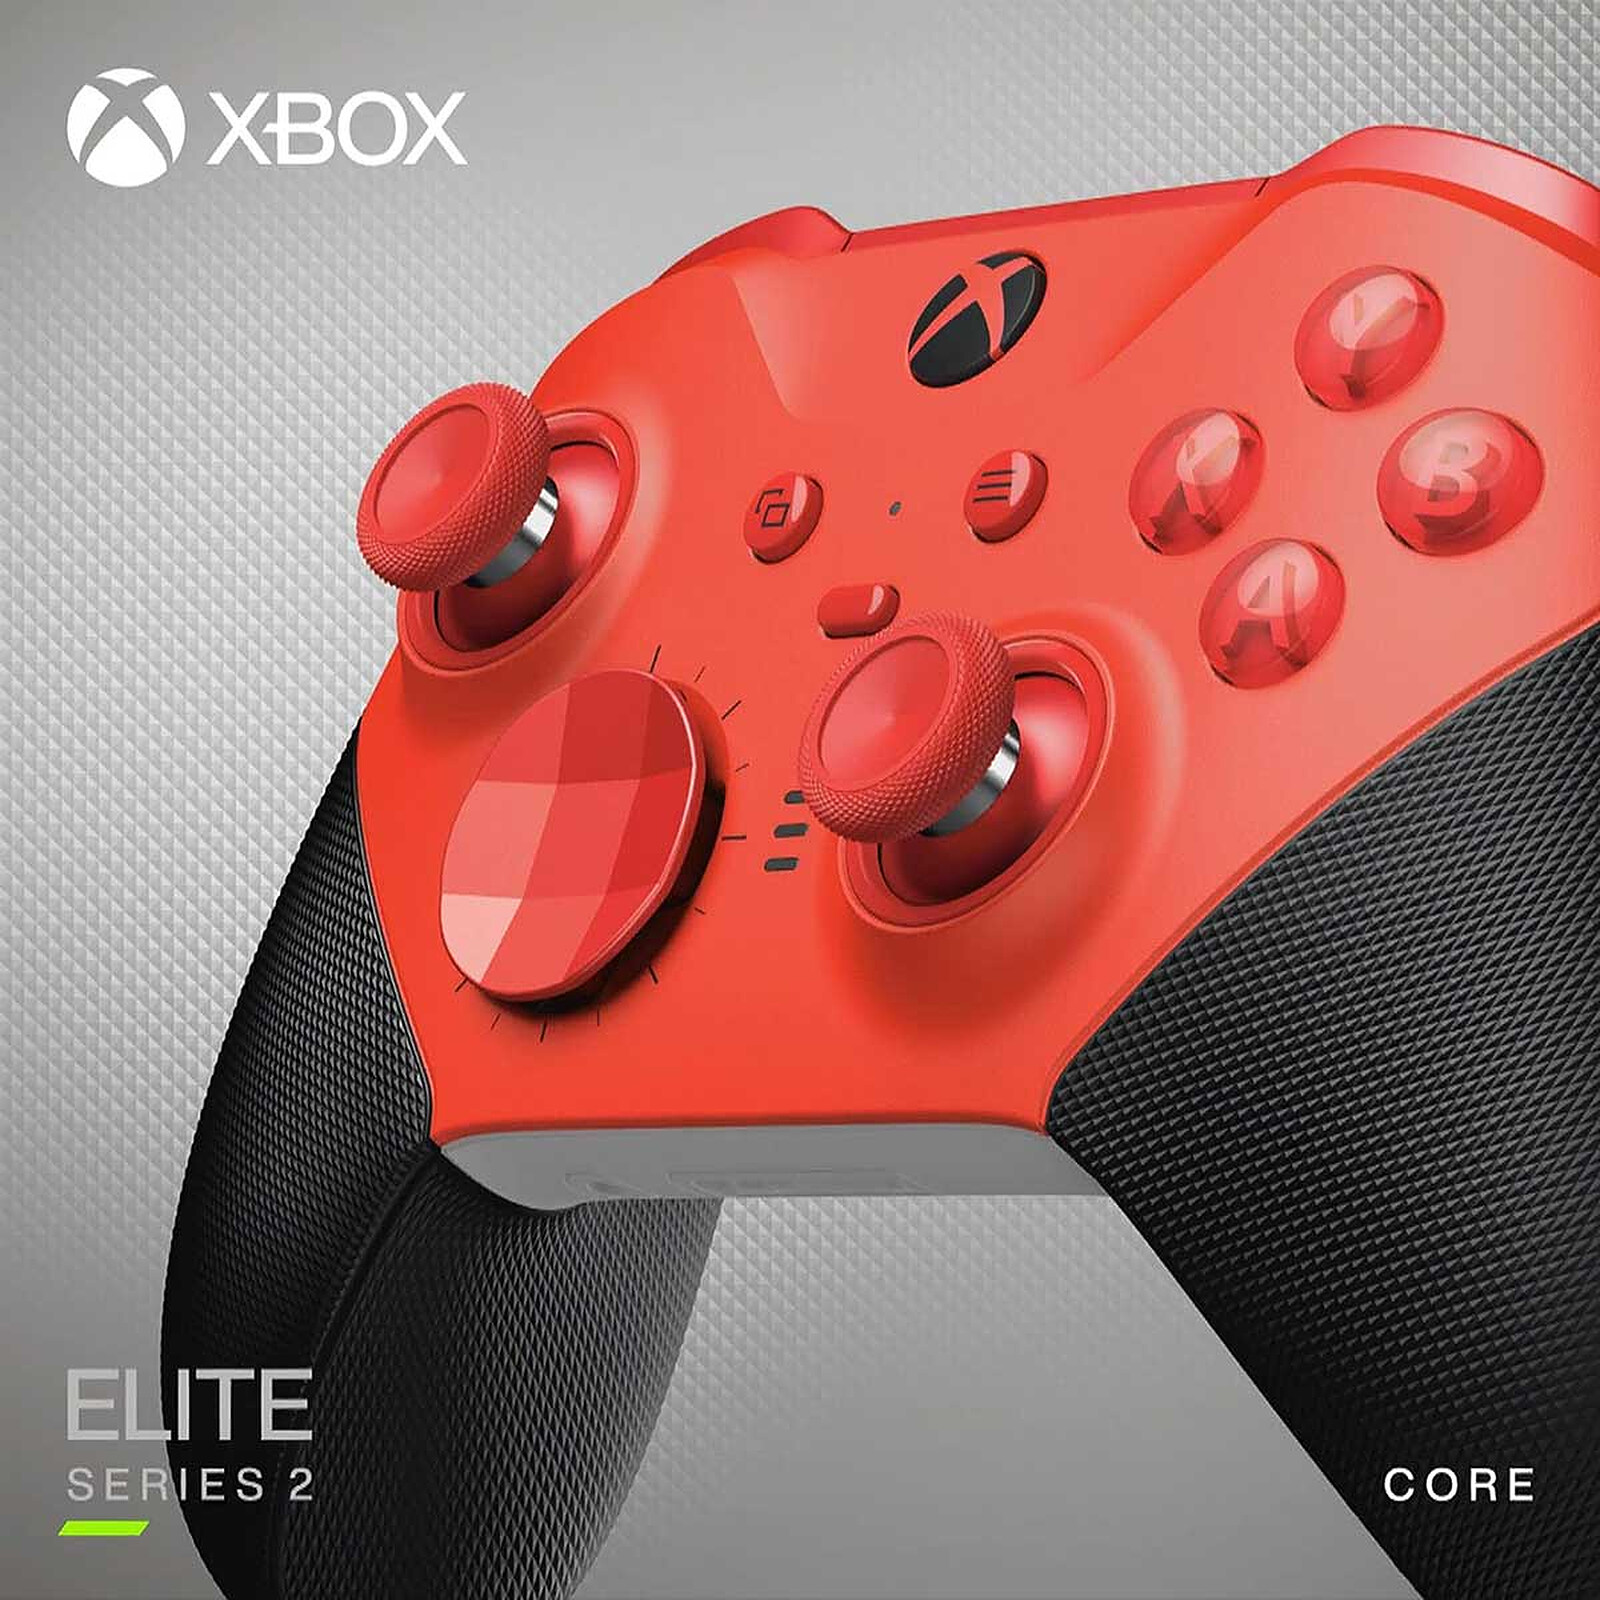 Xbox elite series 2 controller - Video games & consoles